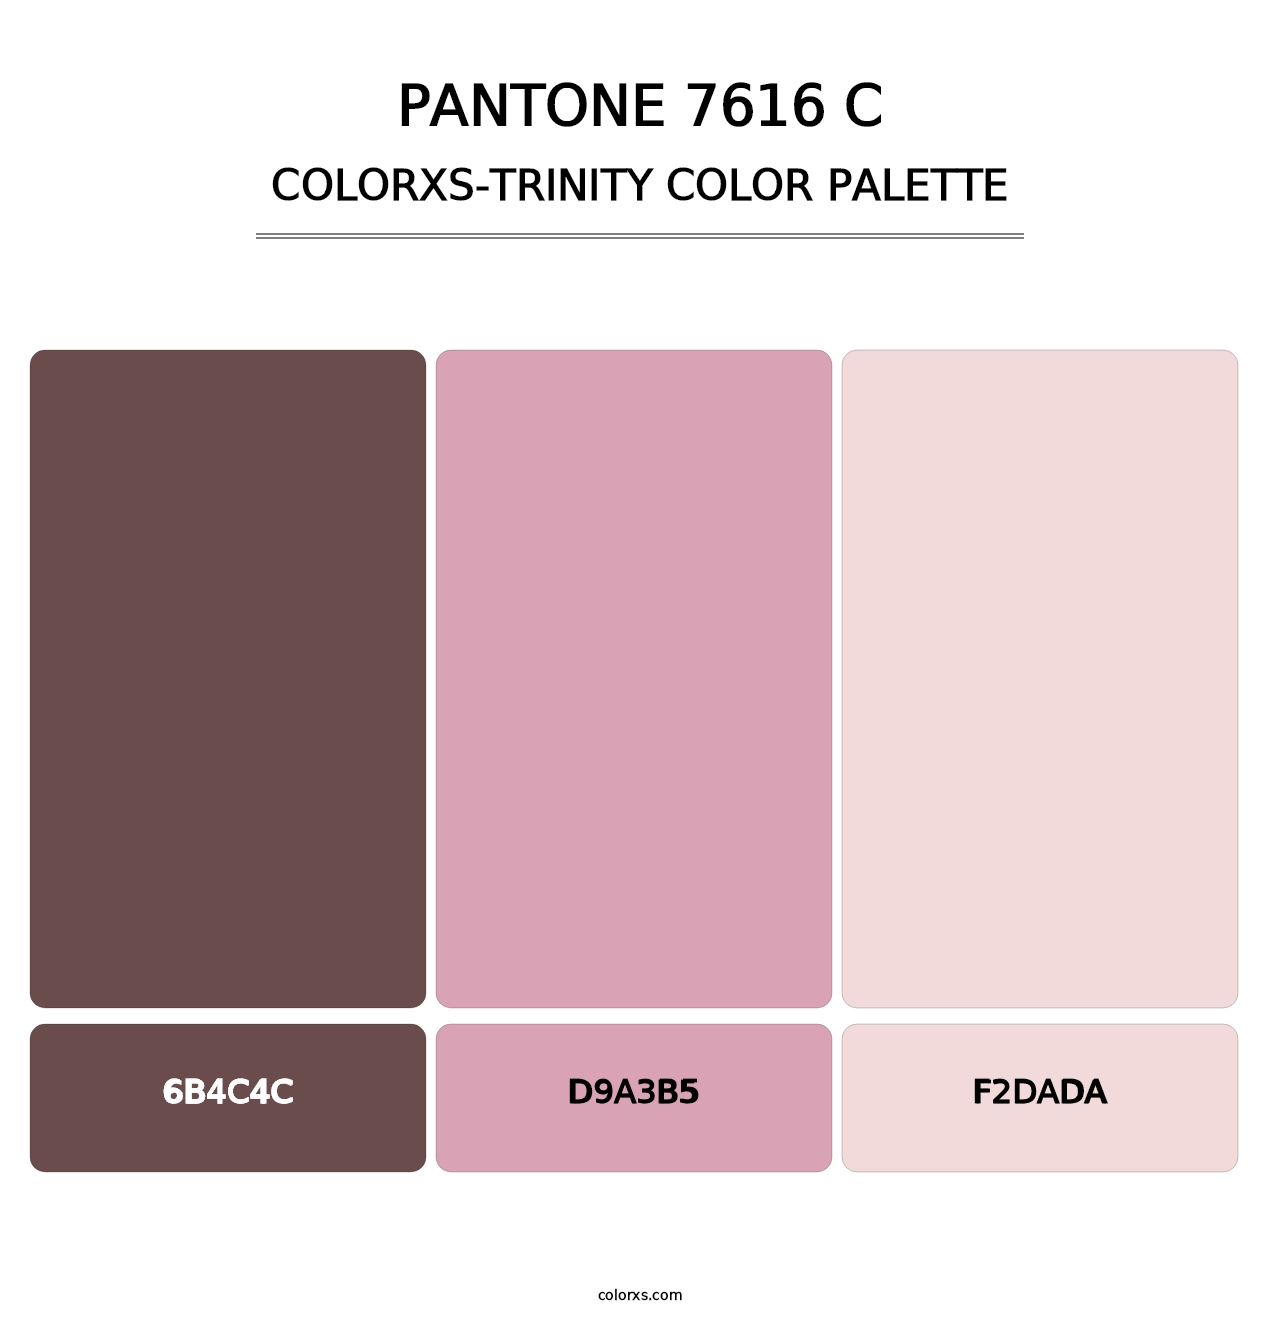 PANTONE 7616 C - Colorxs Trinity Palette